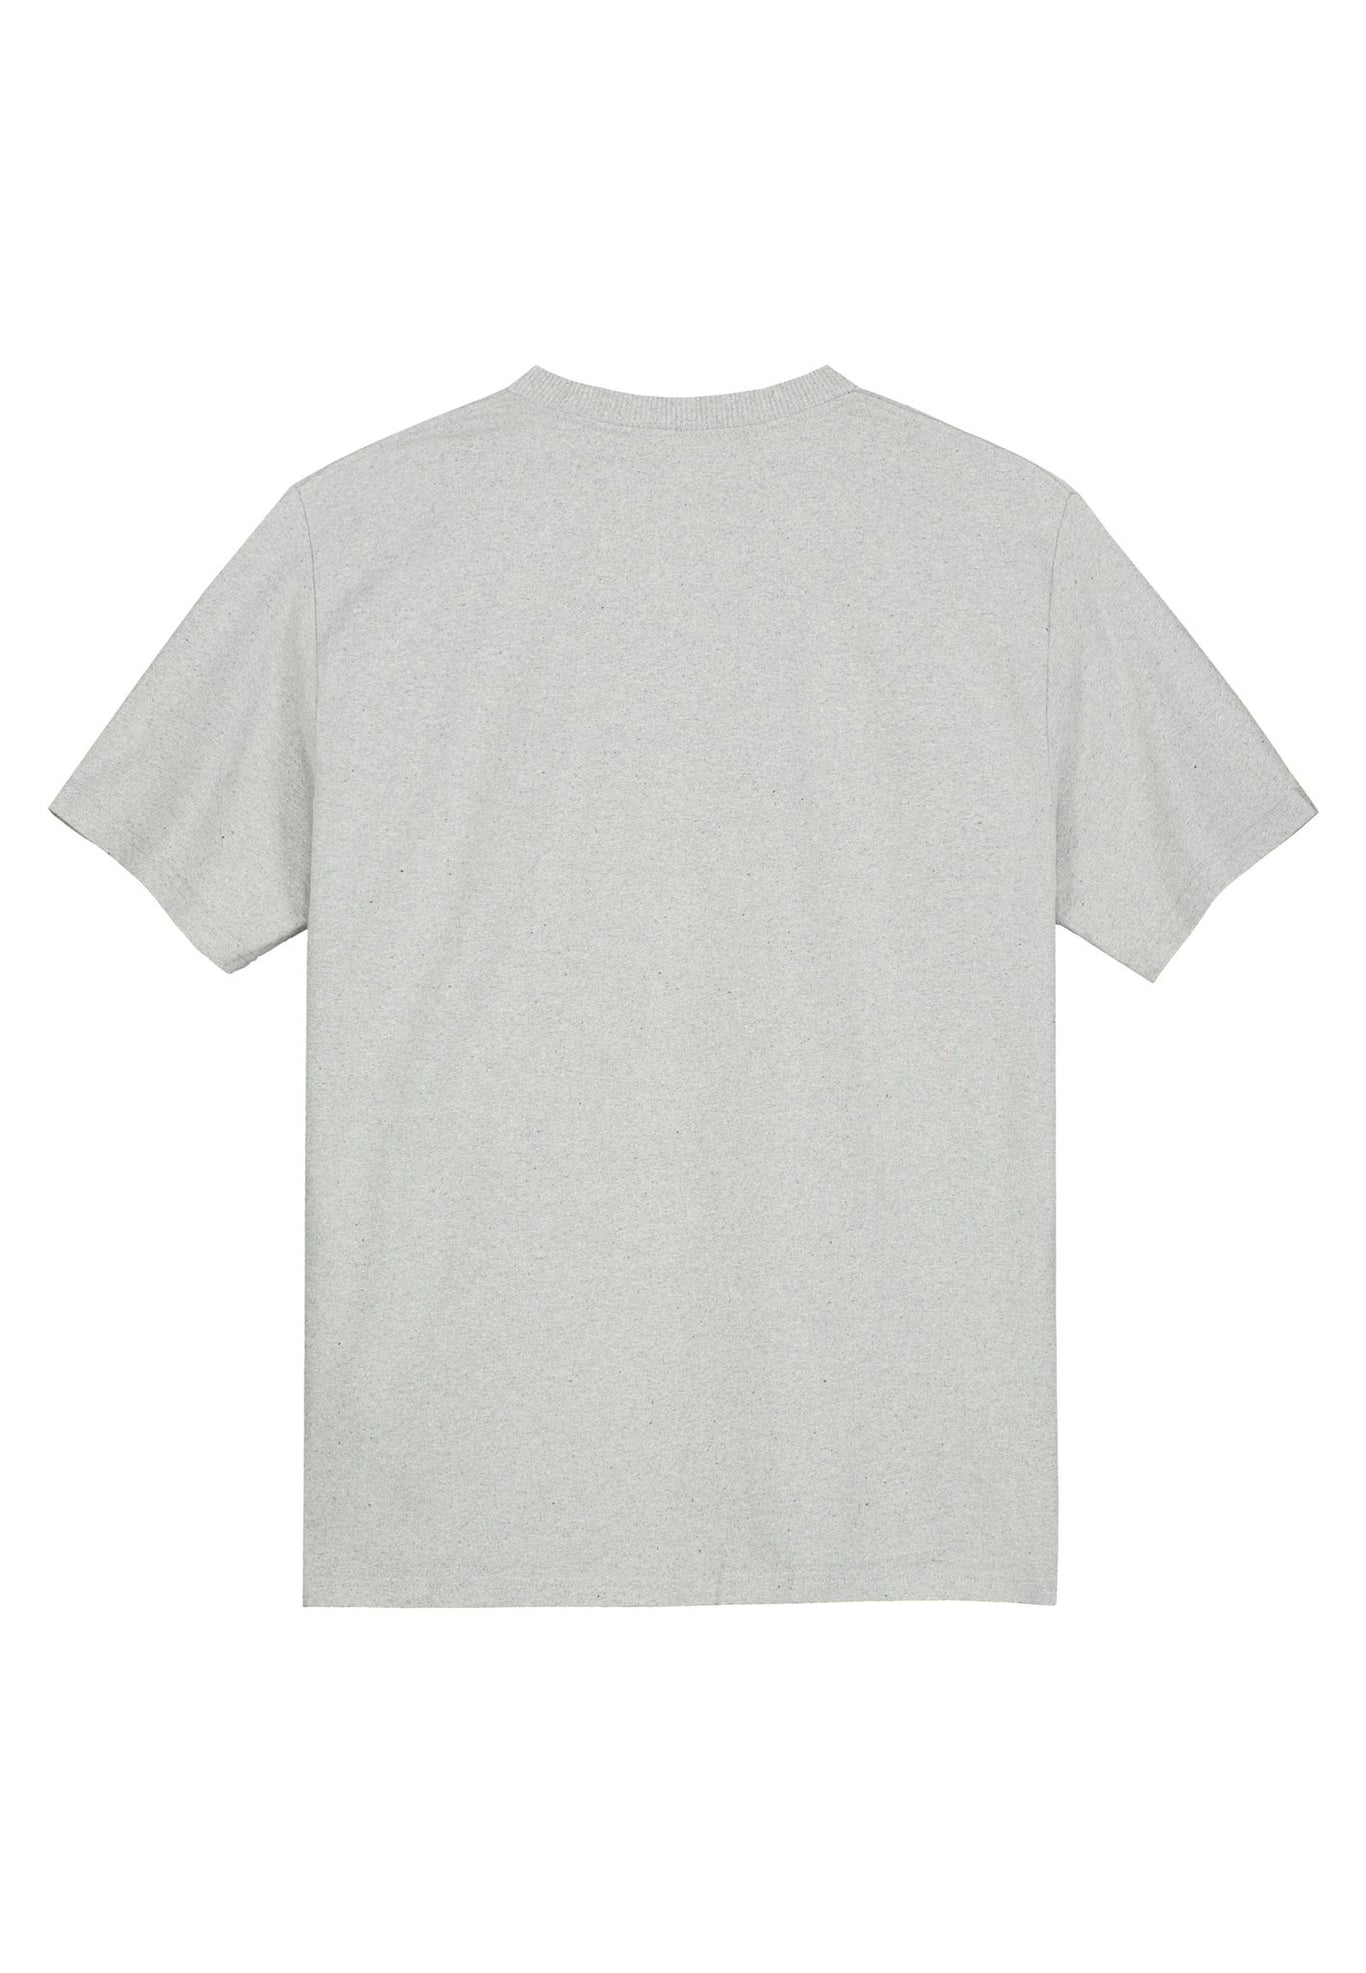 Full Circle Grey T-Shirt